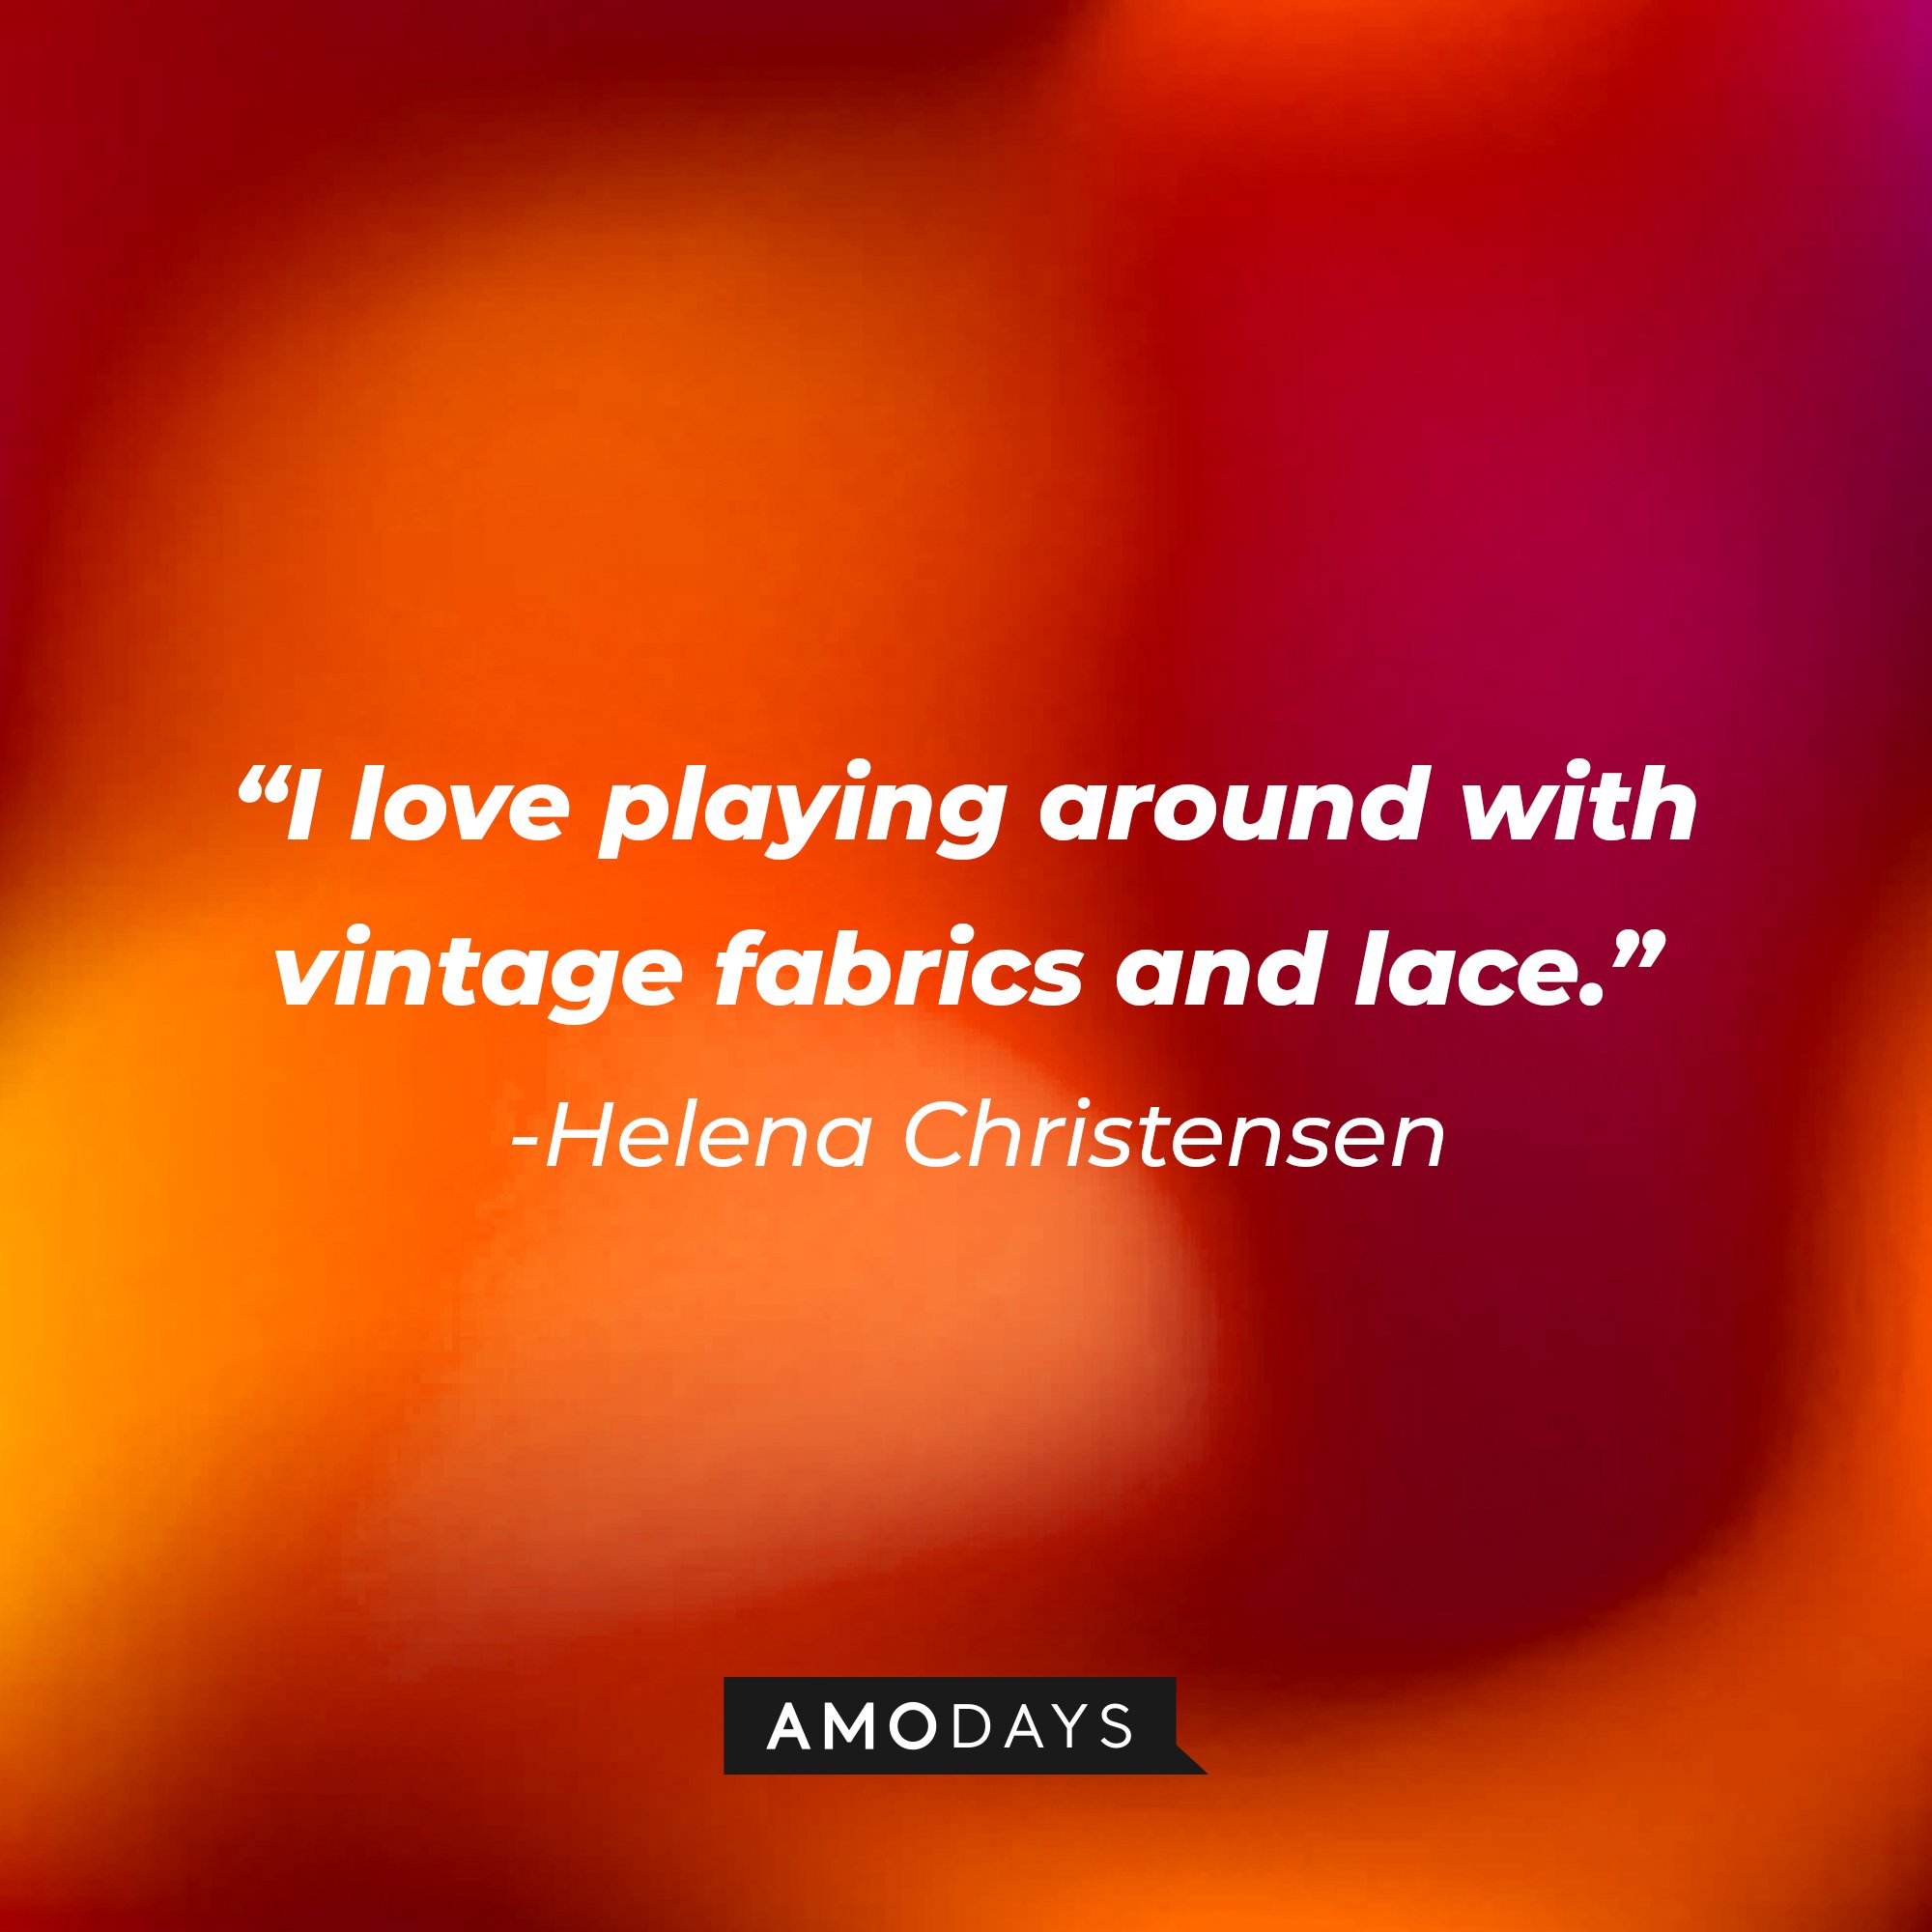 Kat Graham’s quote: "I am more vintage than I am high fashion." | Image: AmoDays